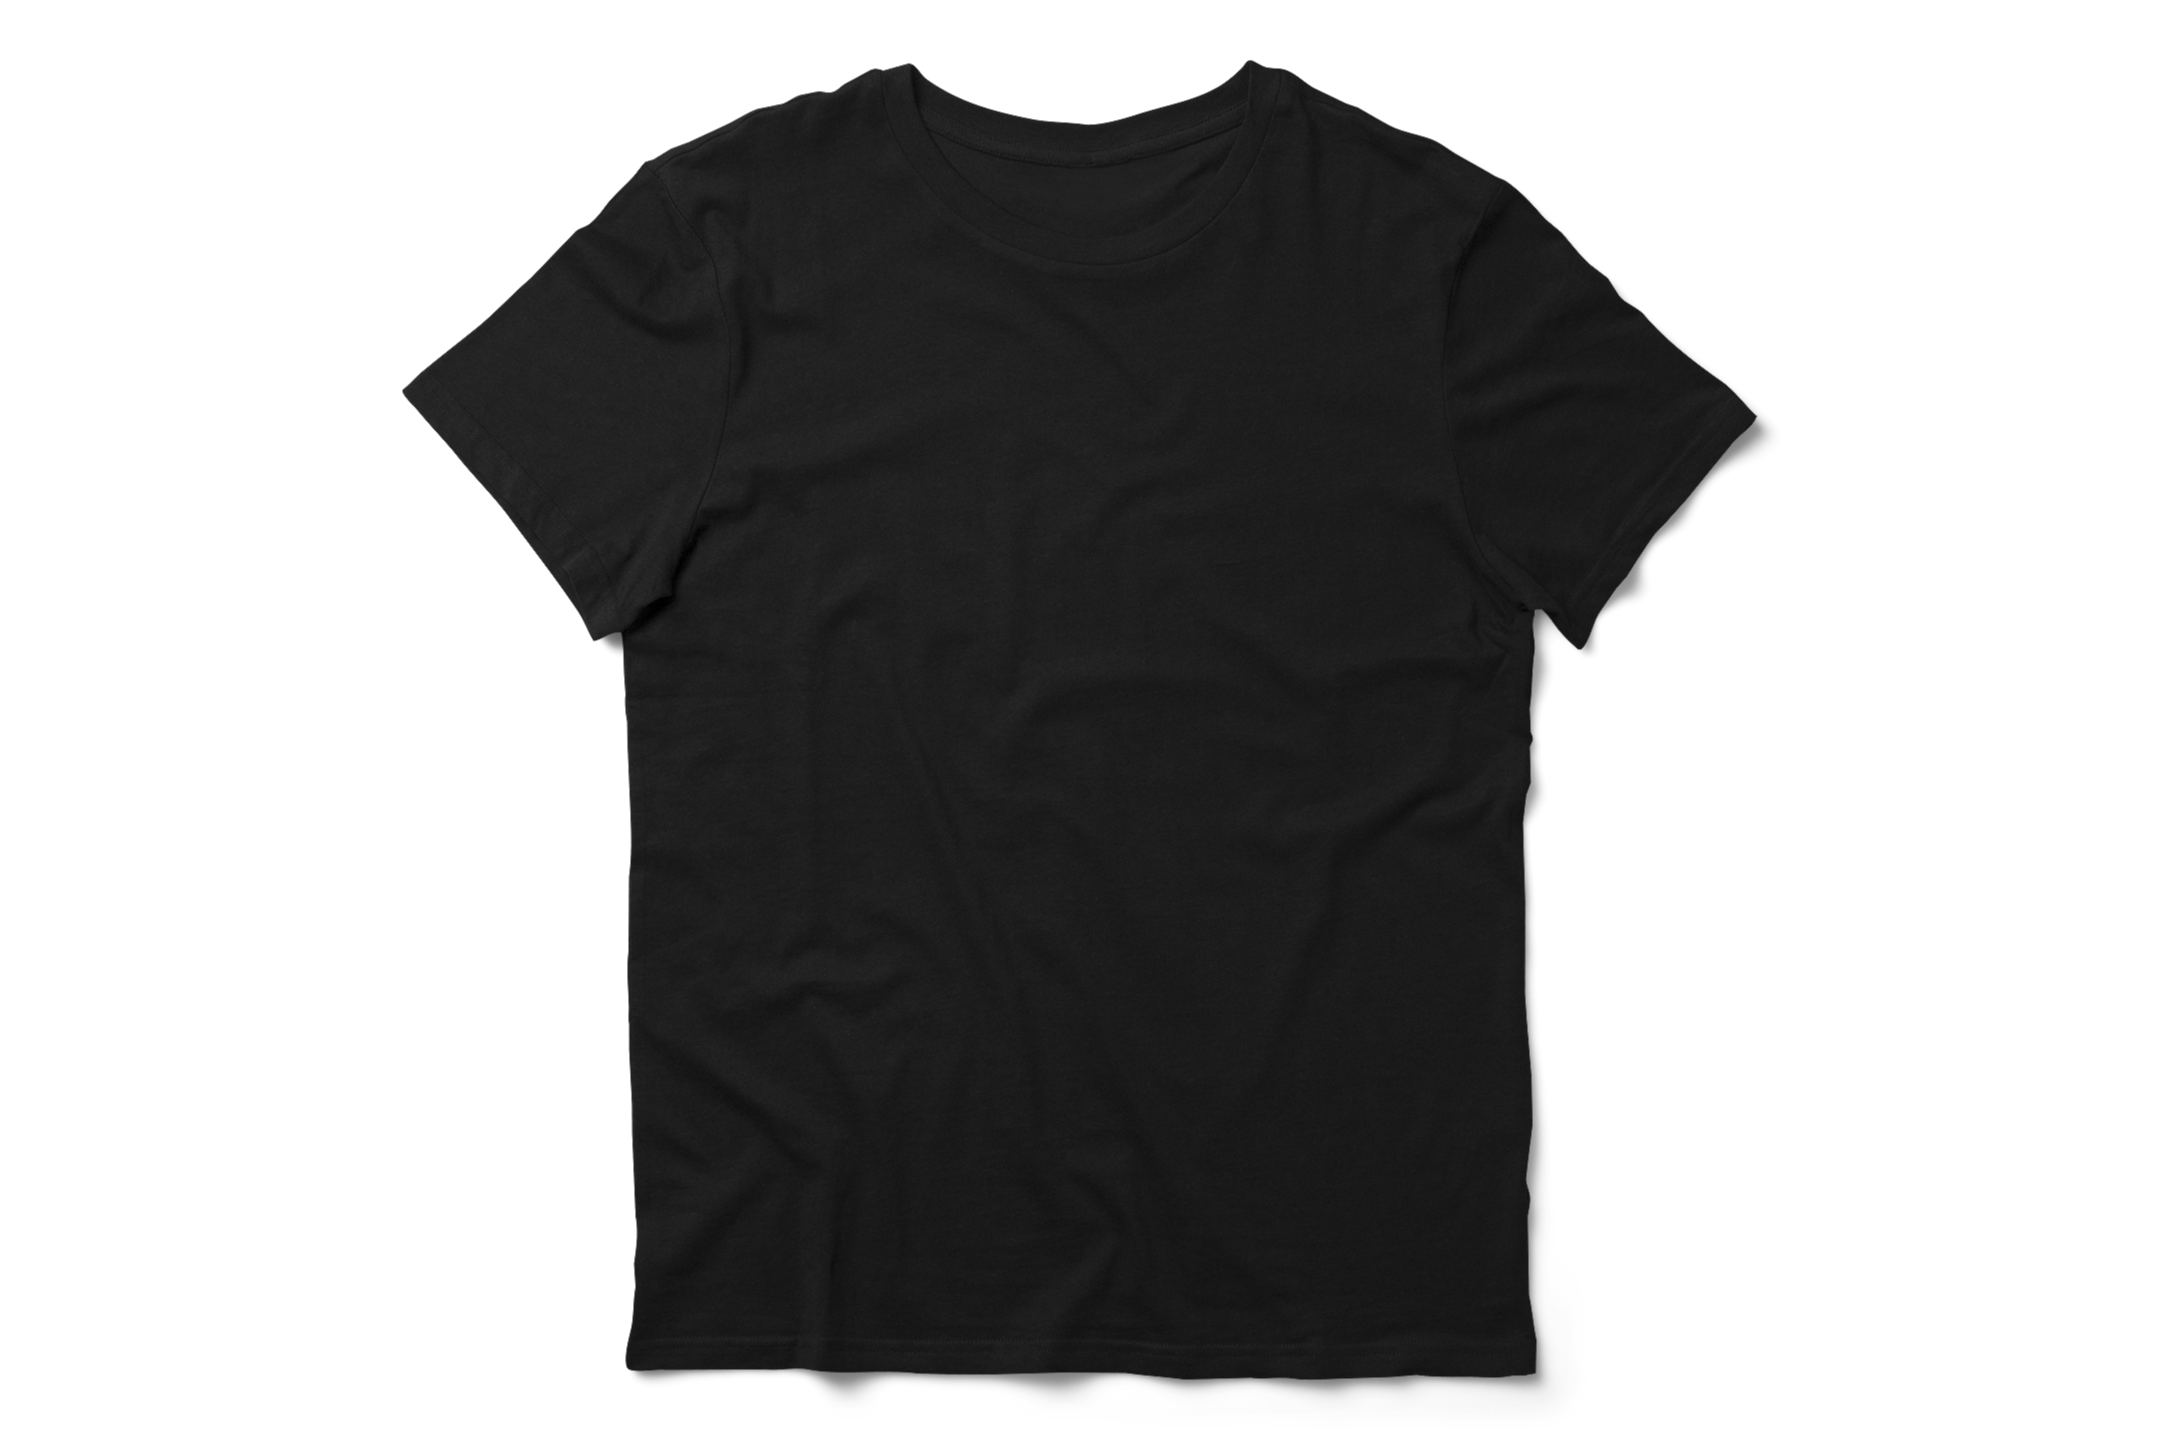 20 Free High Resolution T Shirt Mockup PSD Templates For Designers T Shirt Design Template